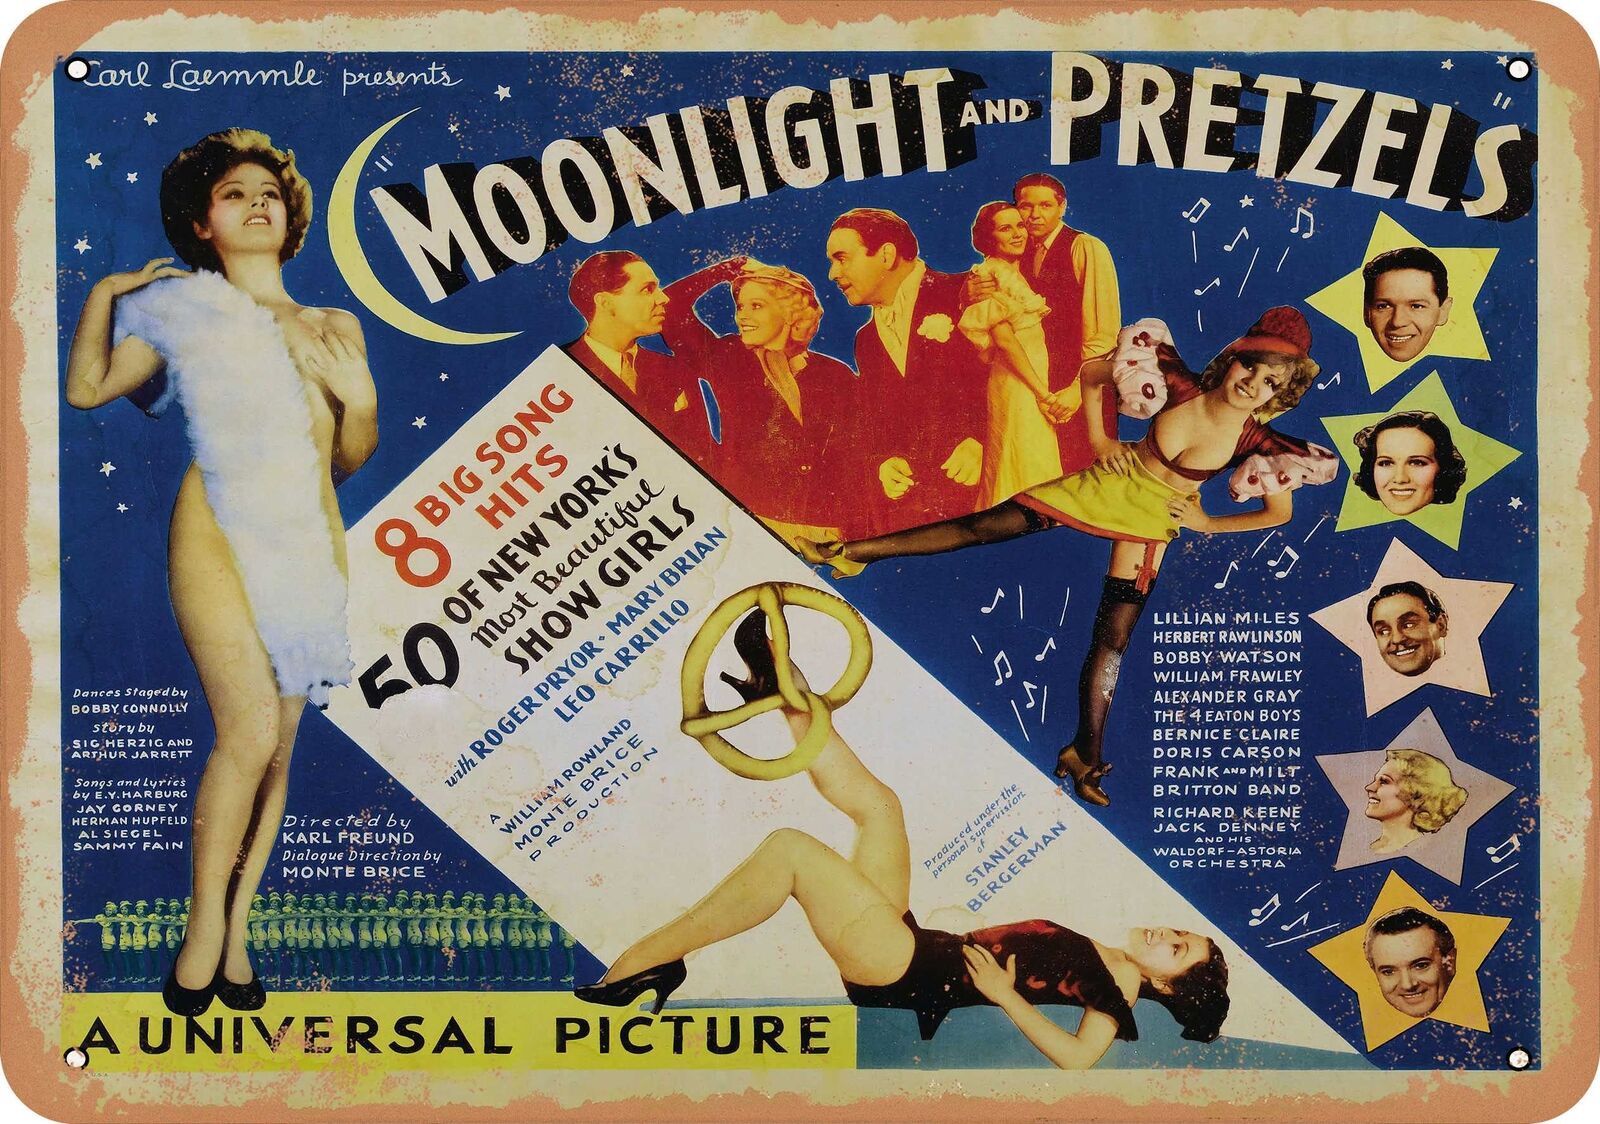 Metal Sign - Moonlight and Pretzels (1933) - Vintage Look